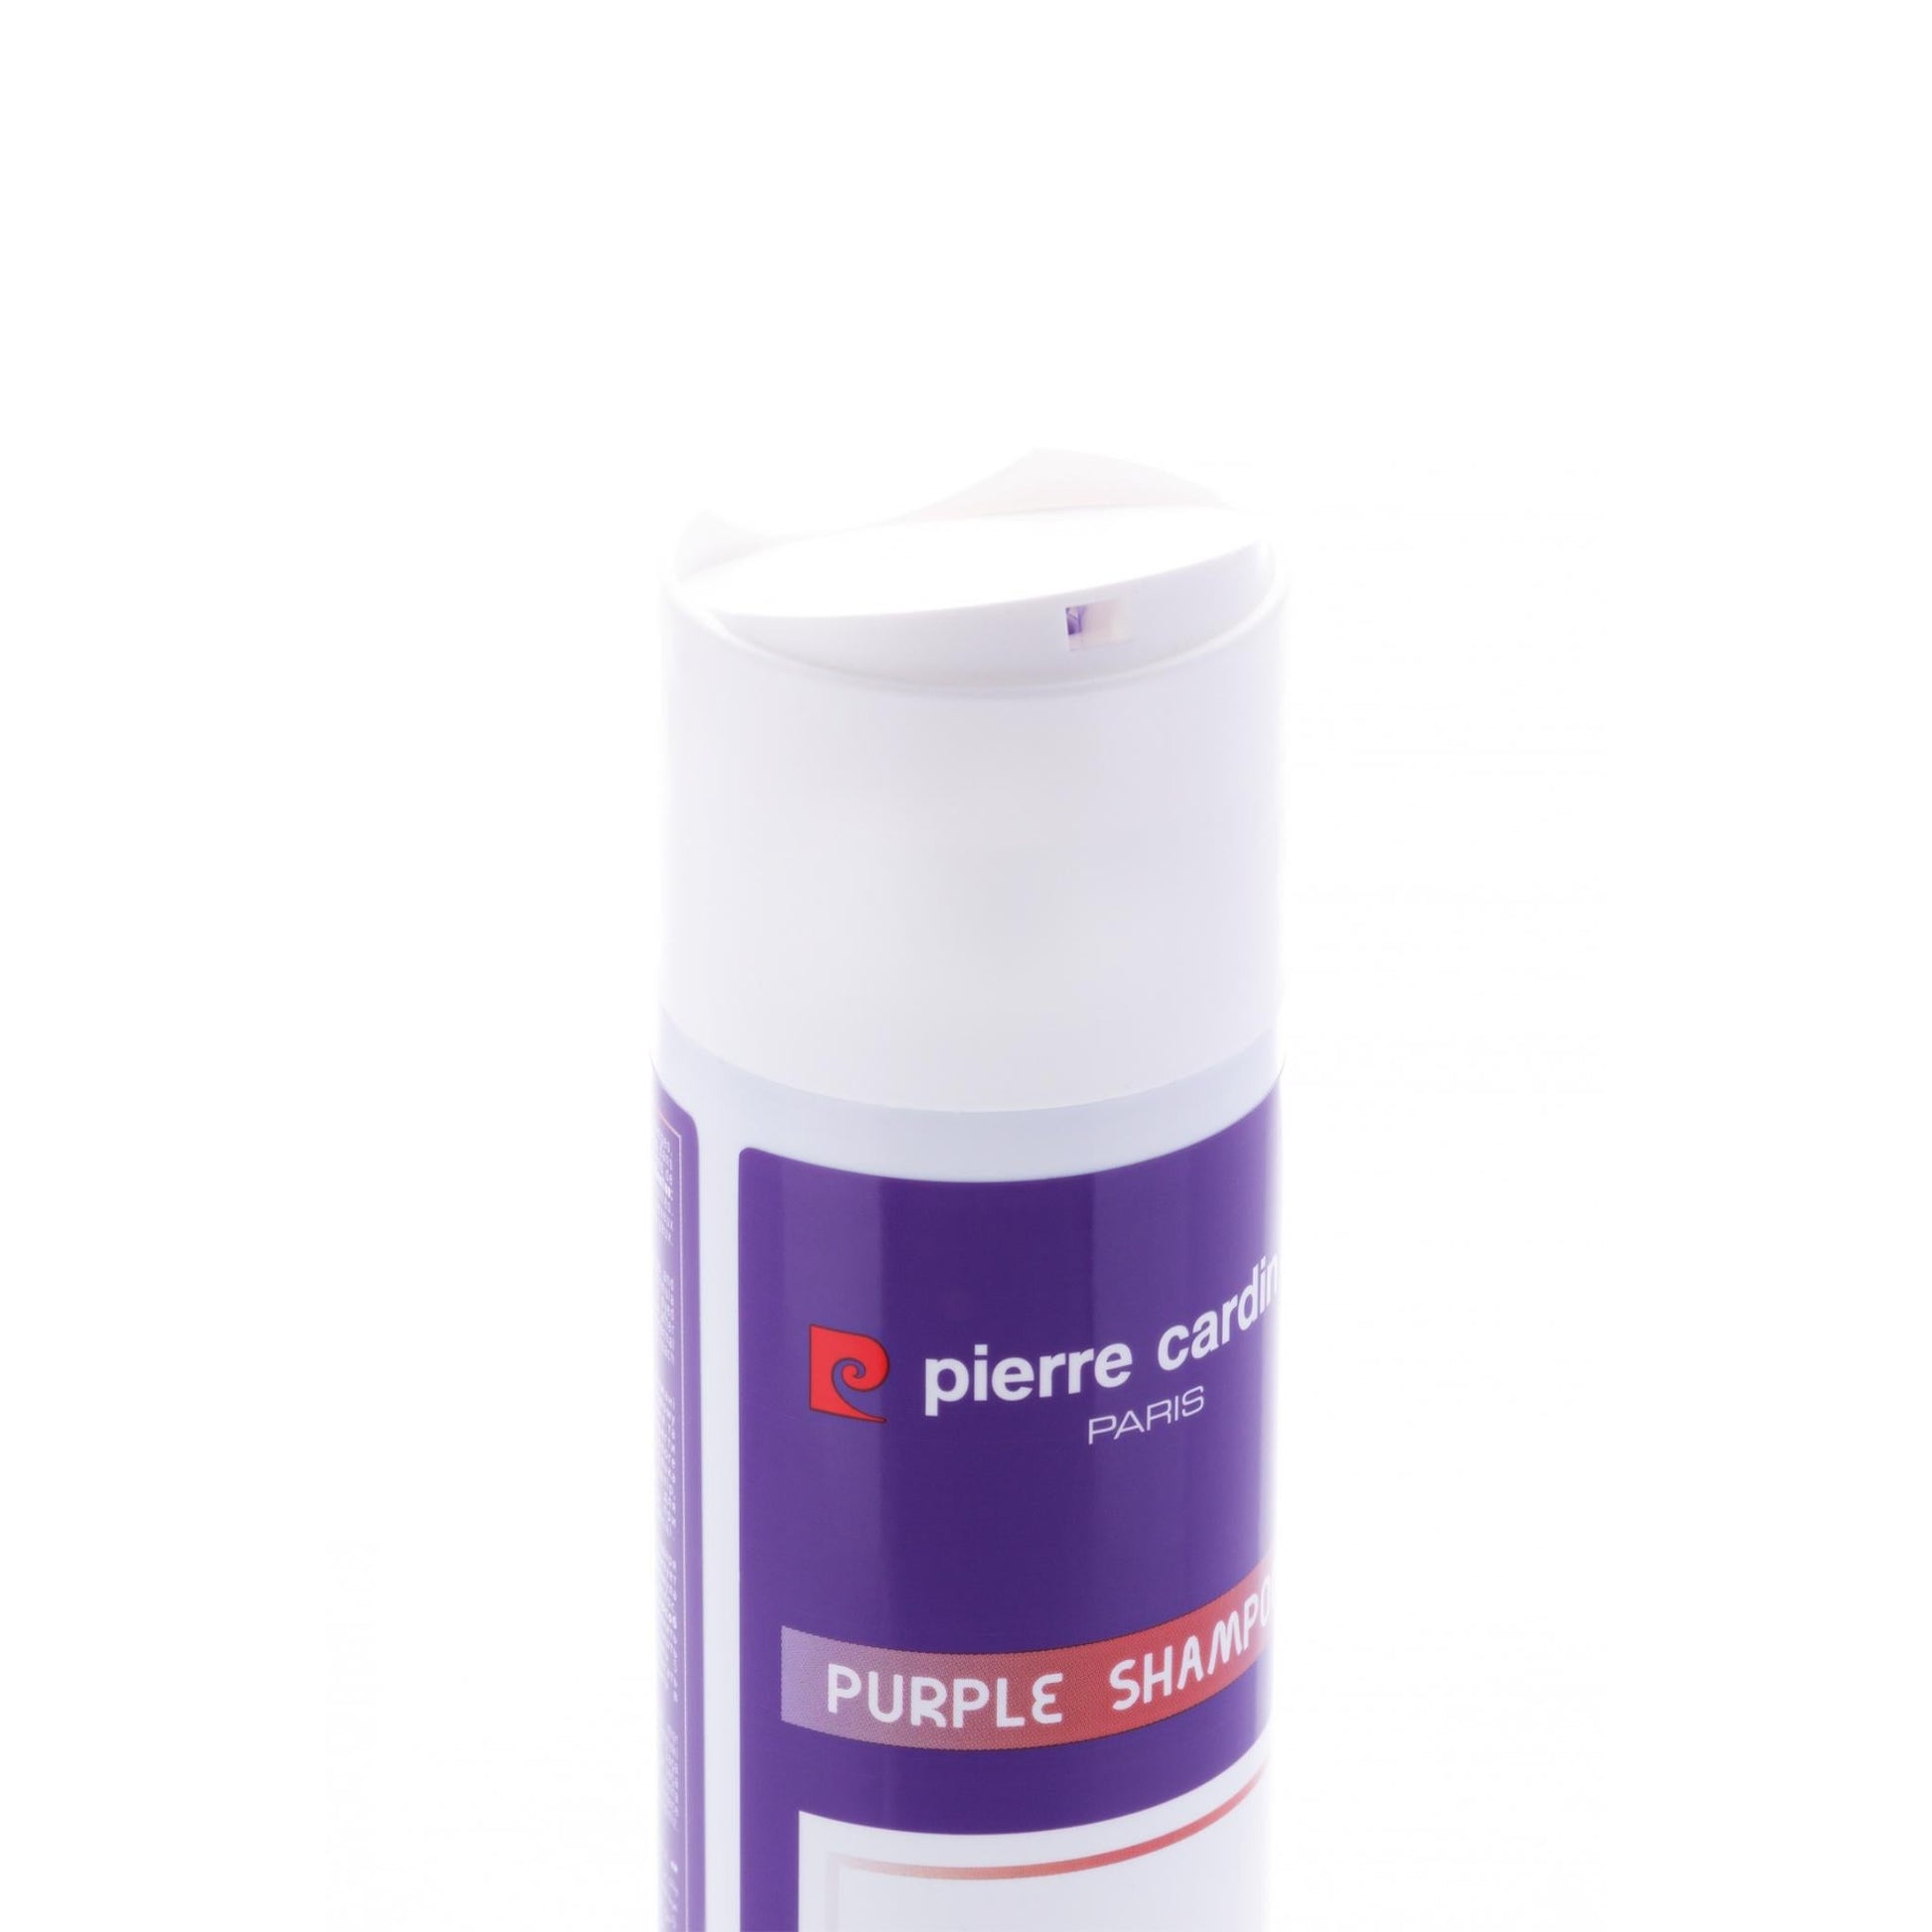 Pierre Cardin Paris Purple Shampoo 200ml